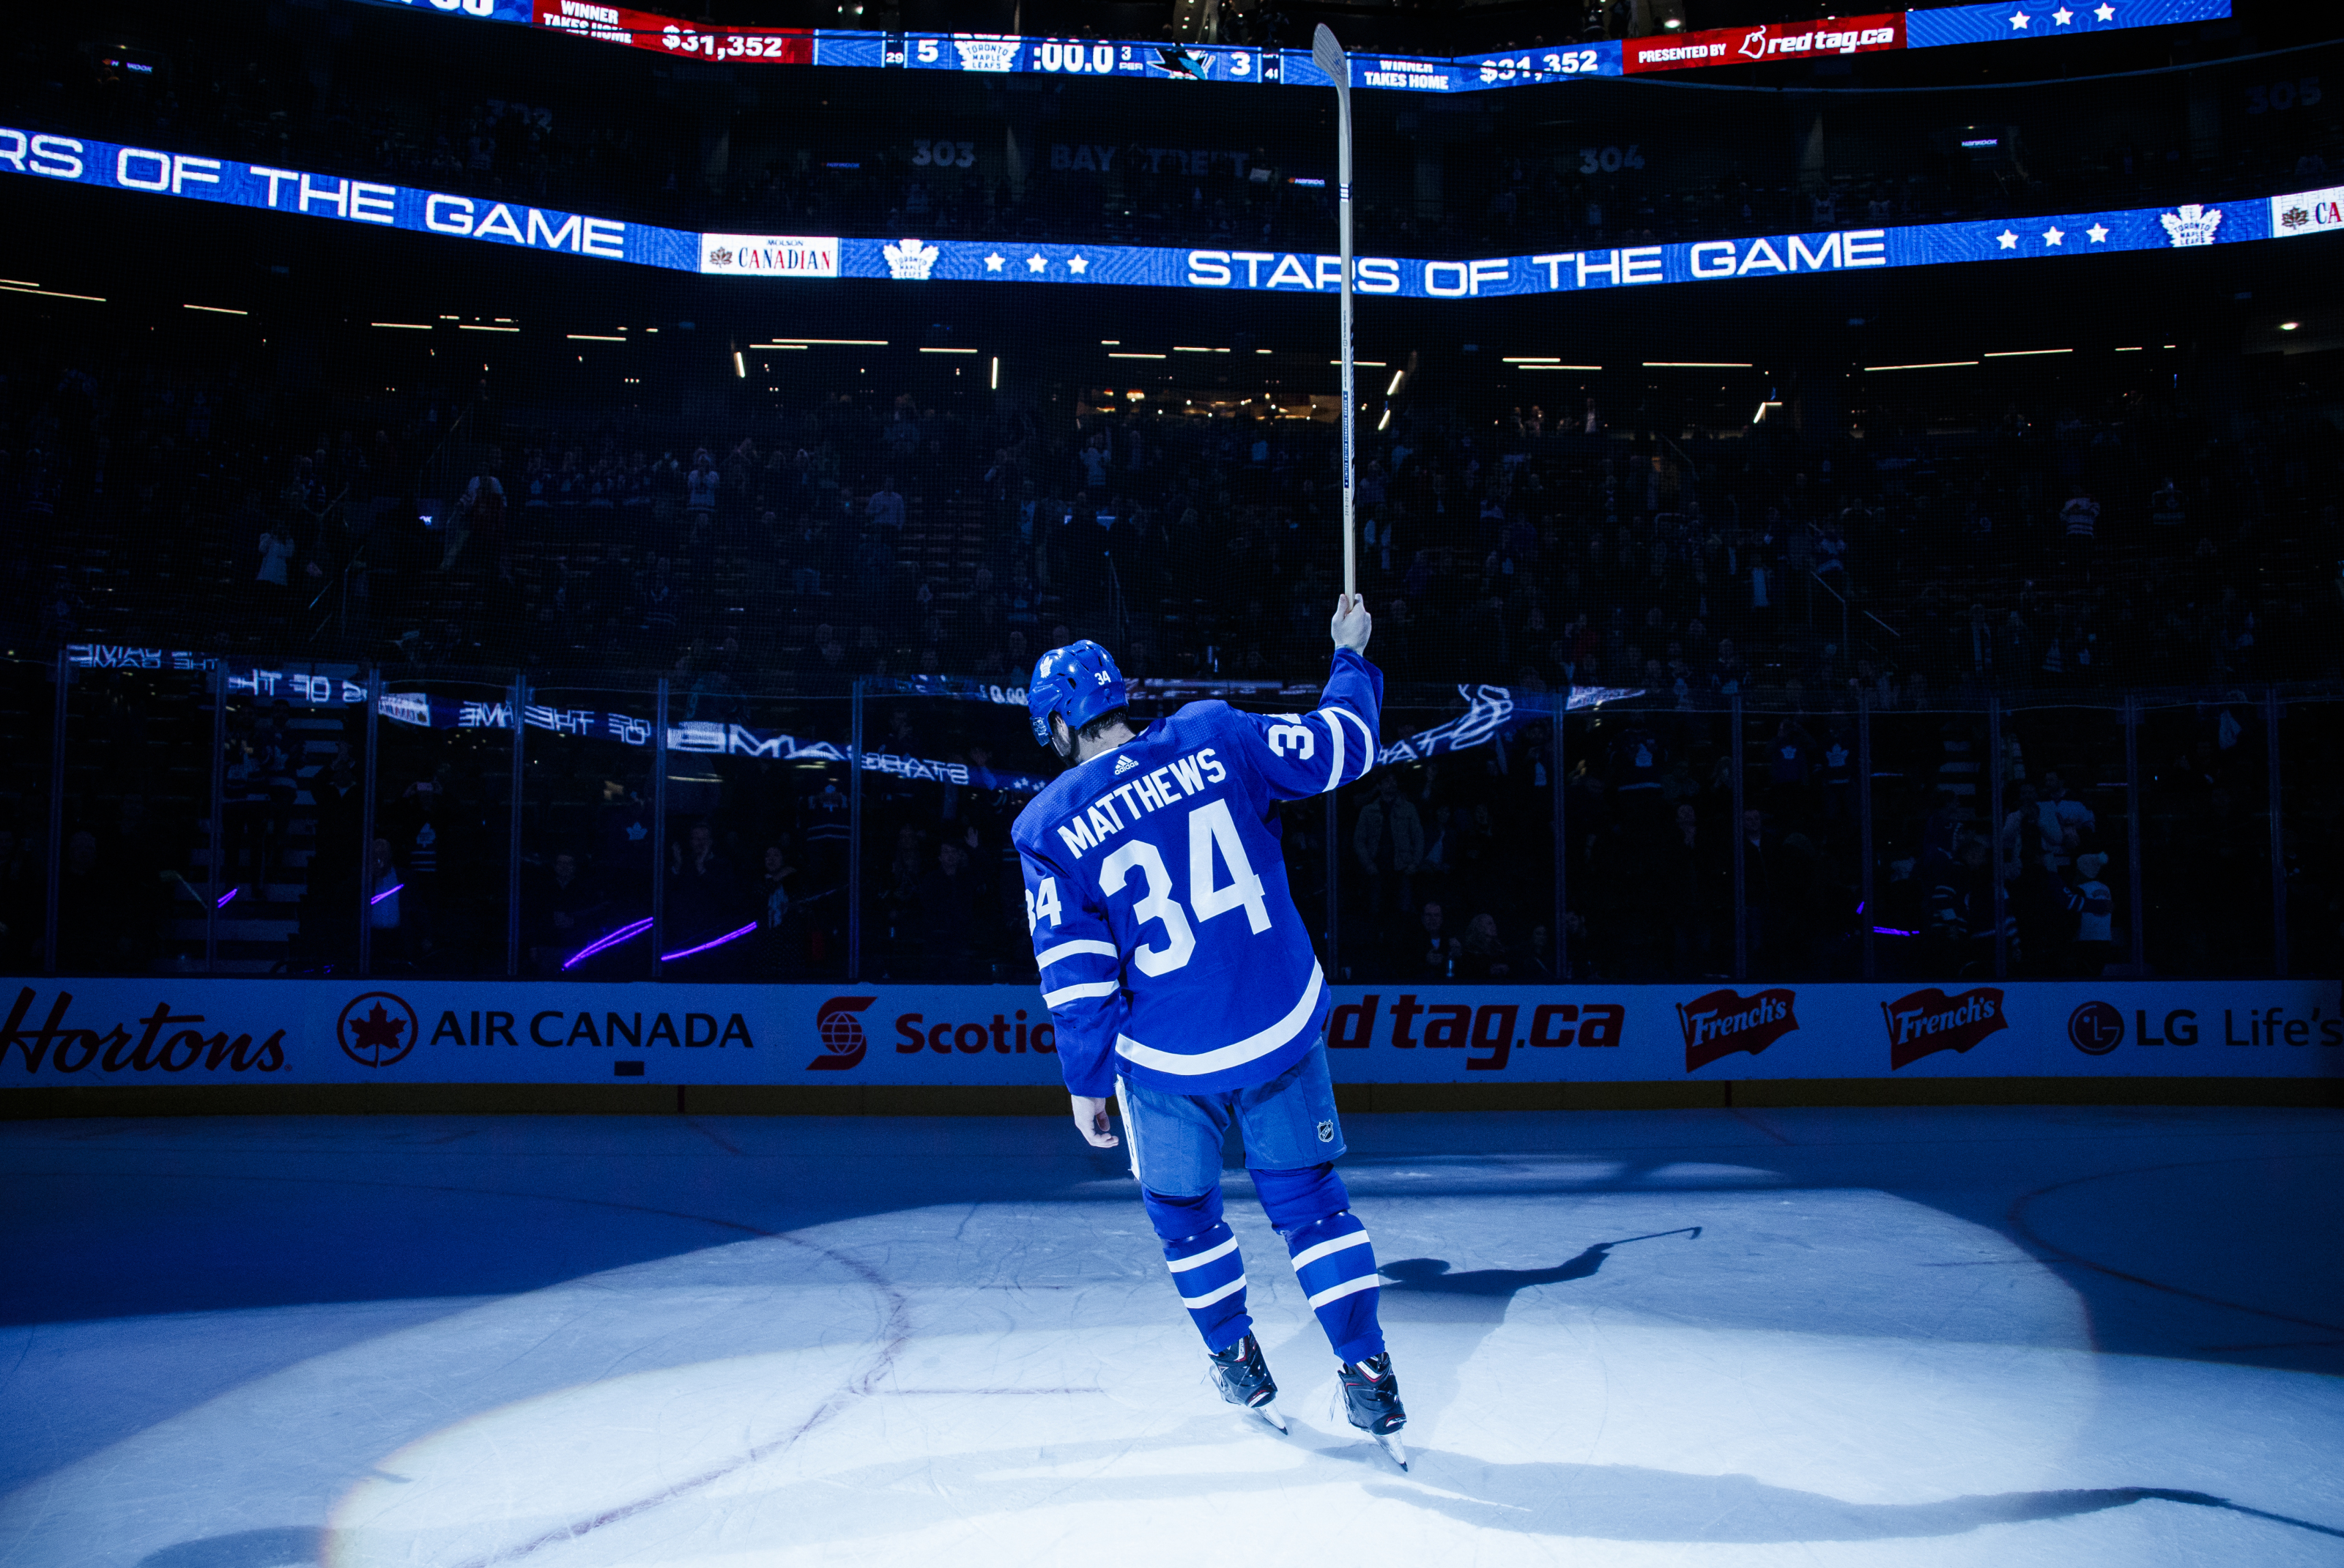 Toronto Maple Leafs: Auston Matthews shouldn't be the next captain